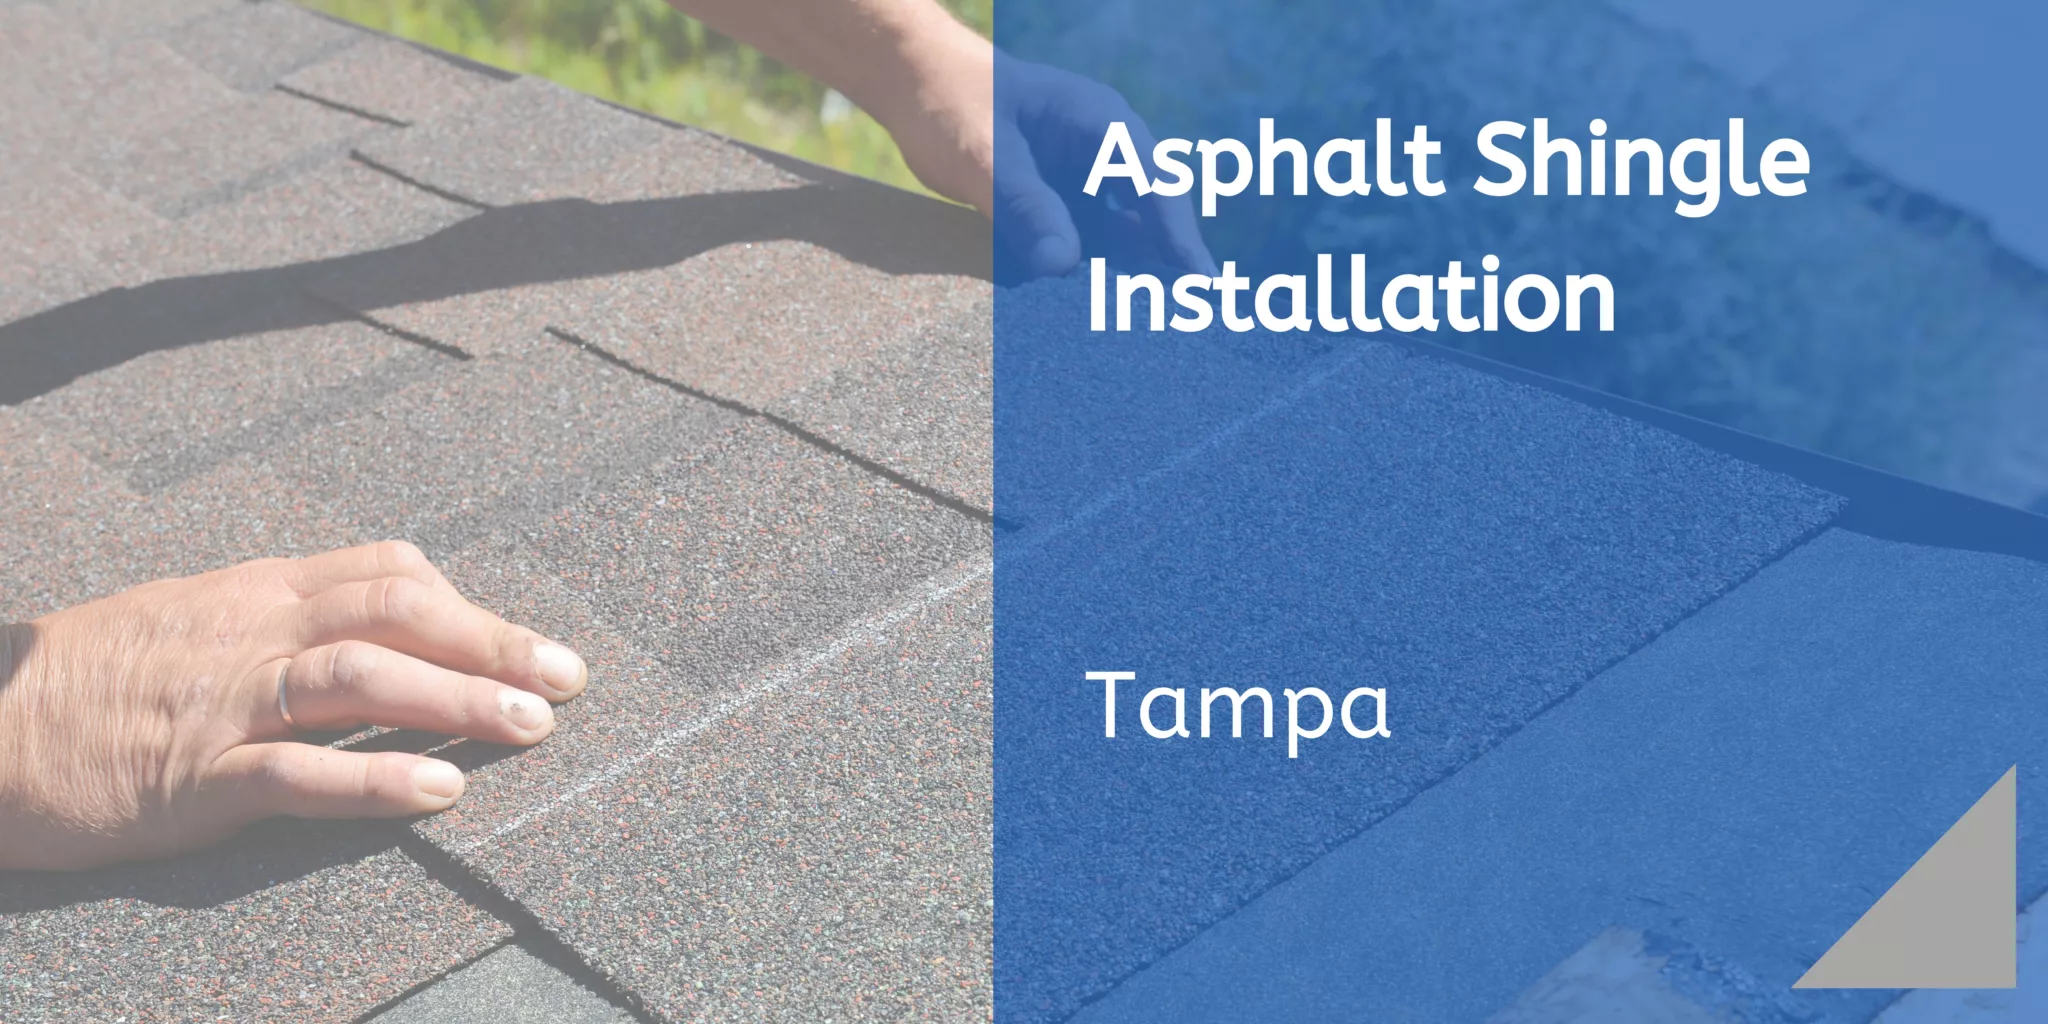 Asphalt shingle installation Tampa